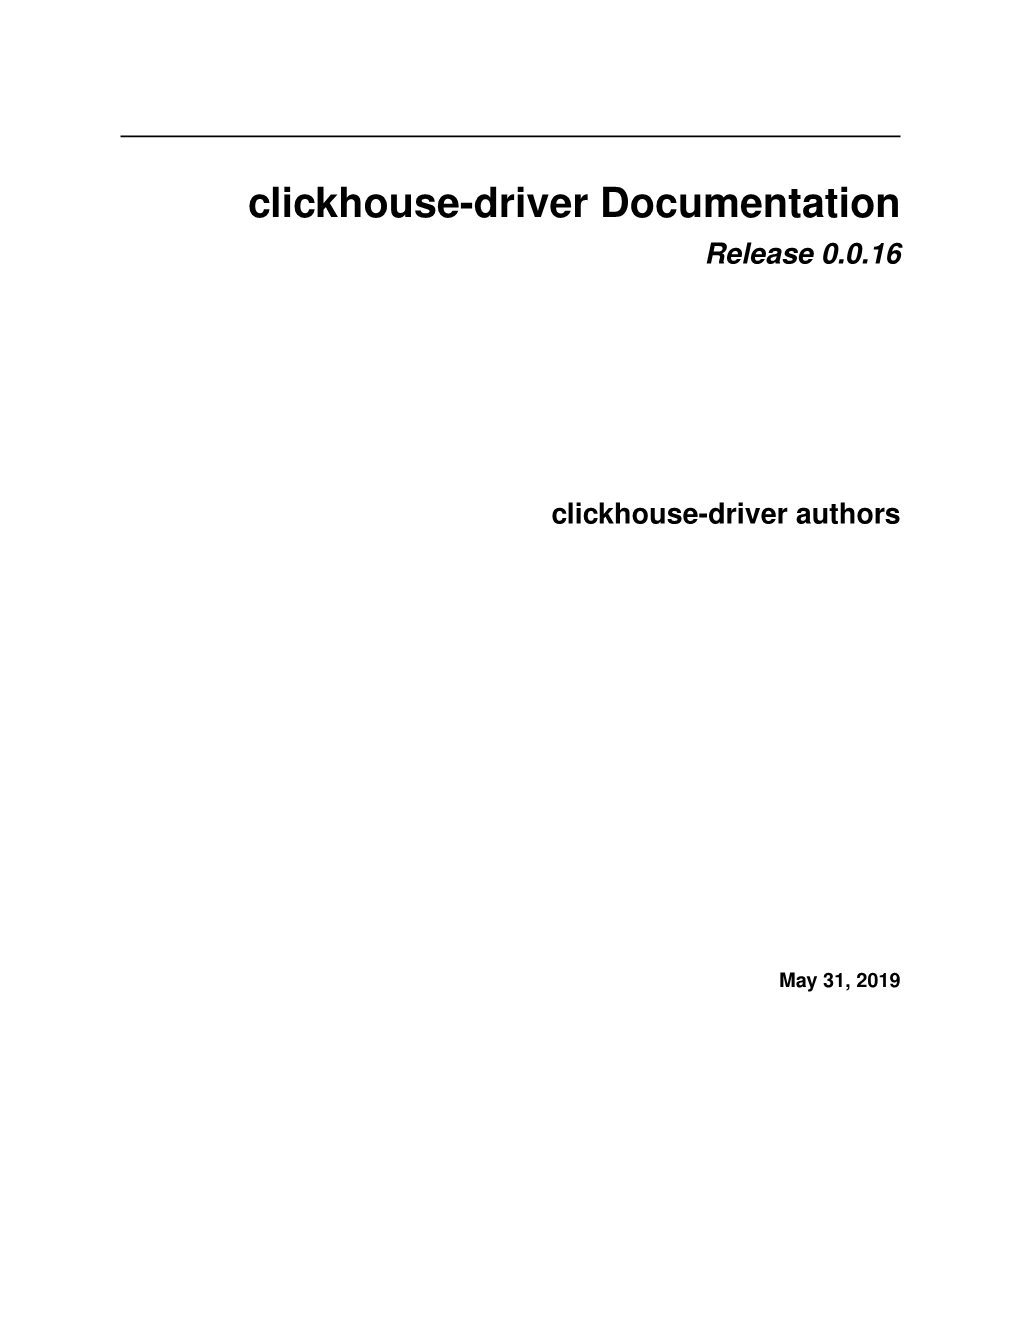 Clickhouse-Driver Documentation Release 0.0.16